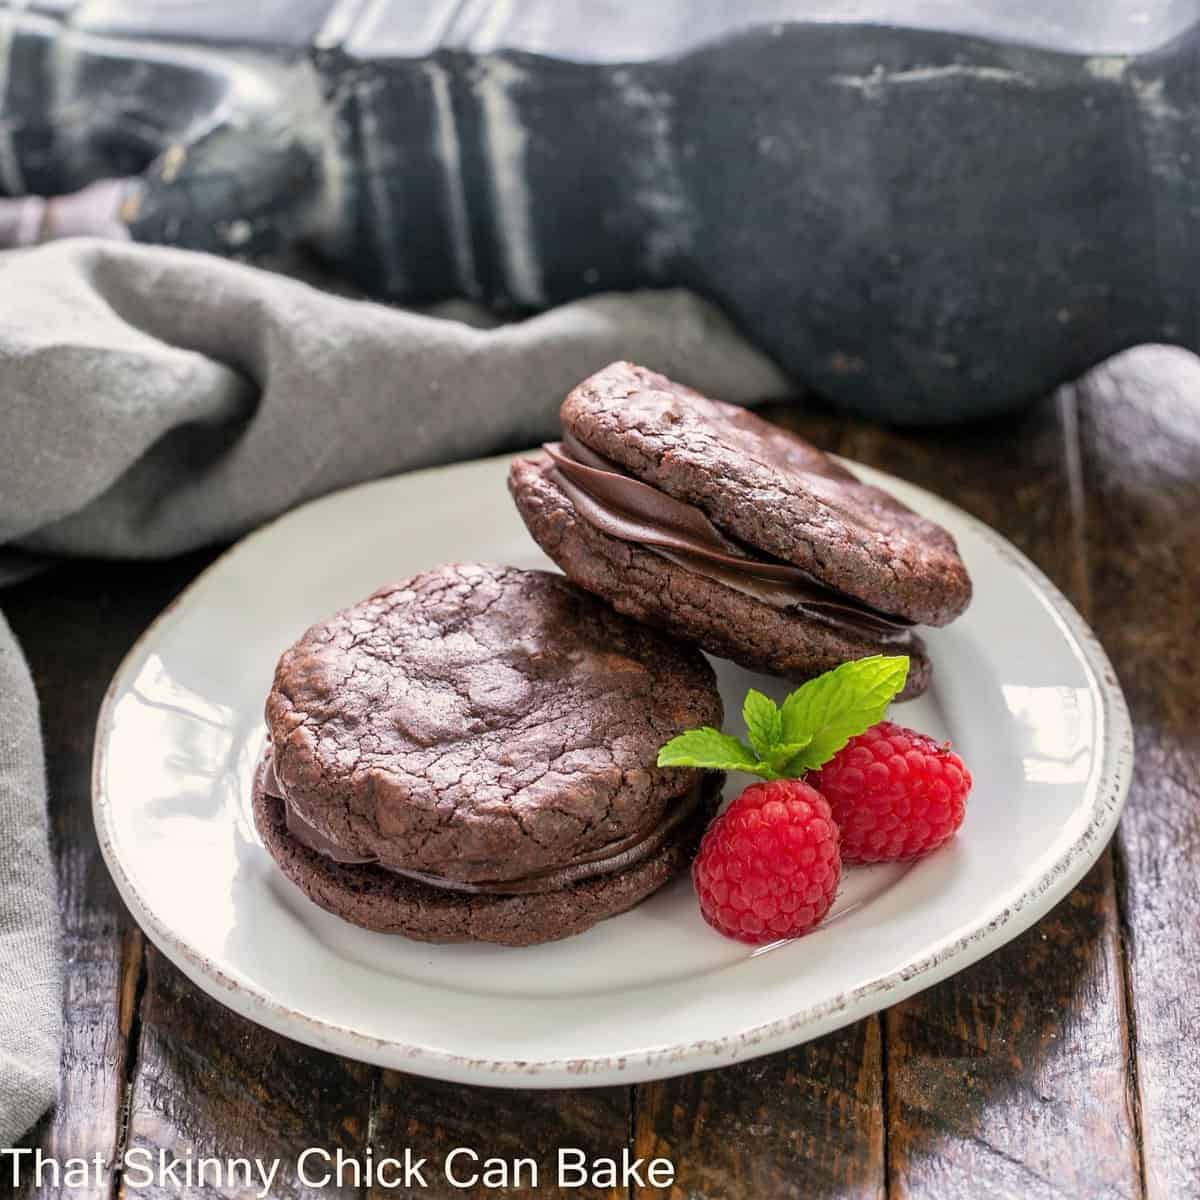 https://www.thatskinnychickcanbake.com/wp-content/uploads/2022/05/Chocolate-Sandwich-Cookies-3-scaled.jpg